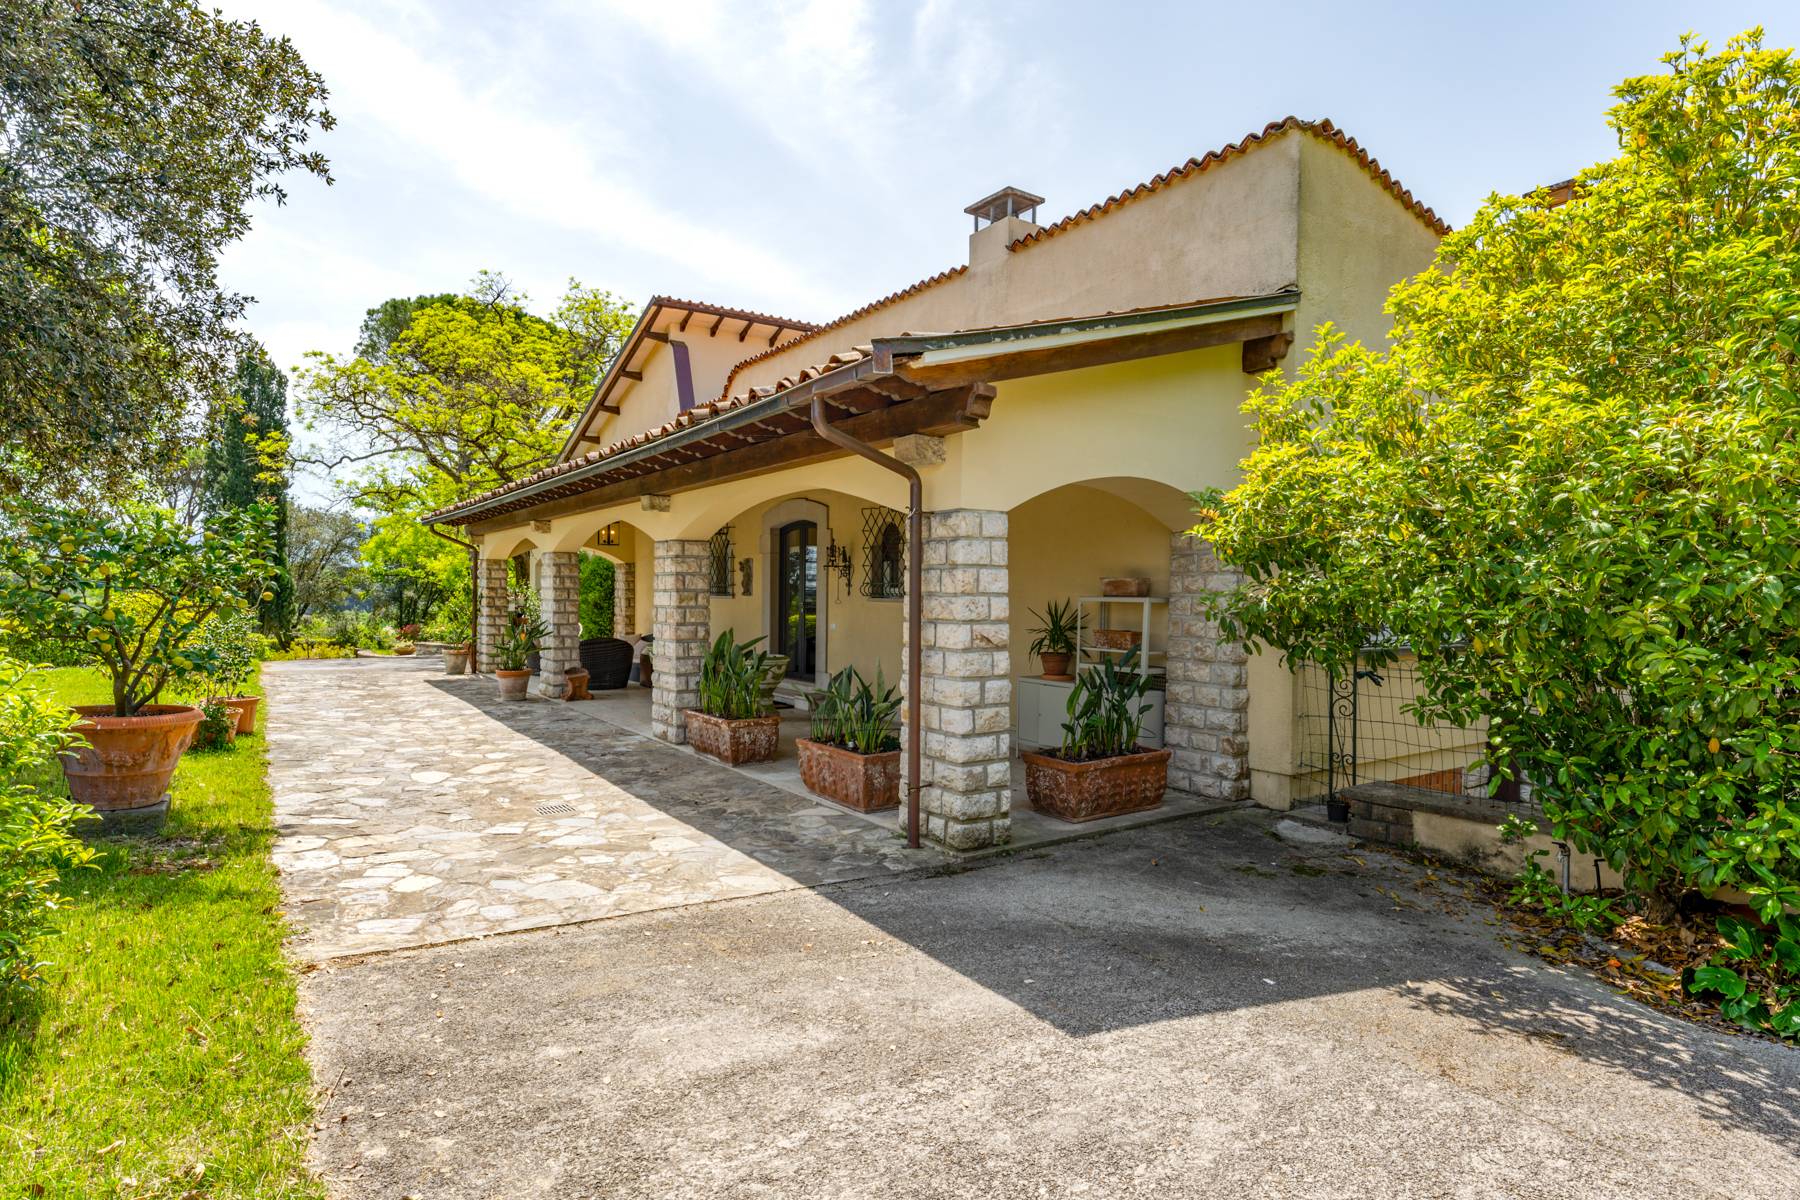 Villa in Vendita a Lucca: 4 locali, 930 mq - Foto 9